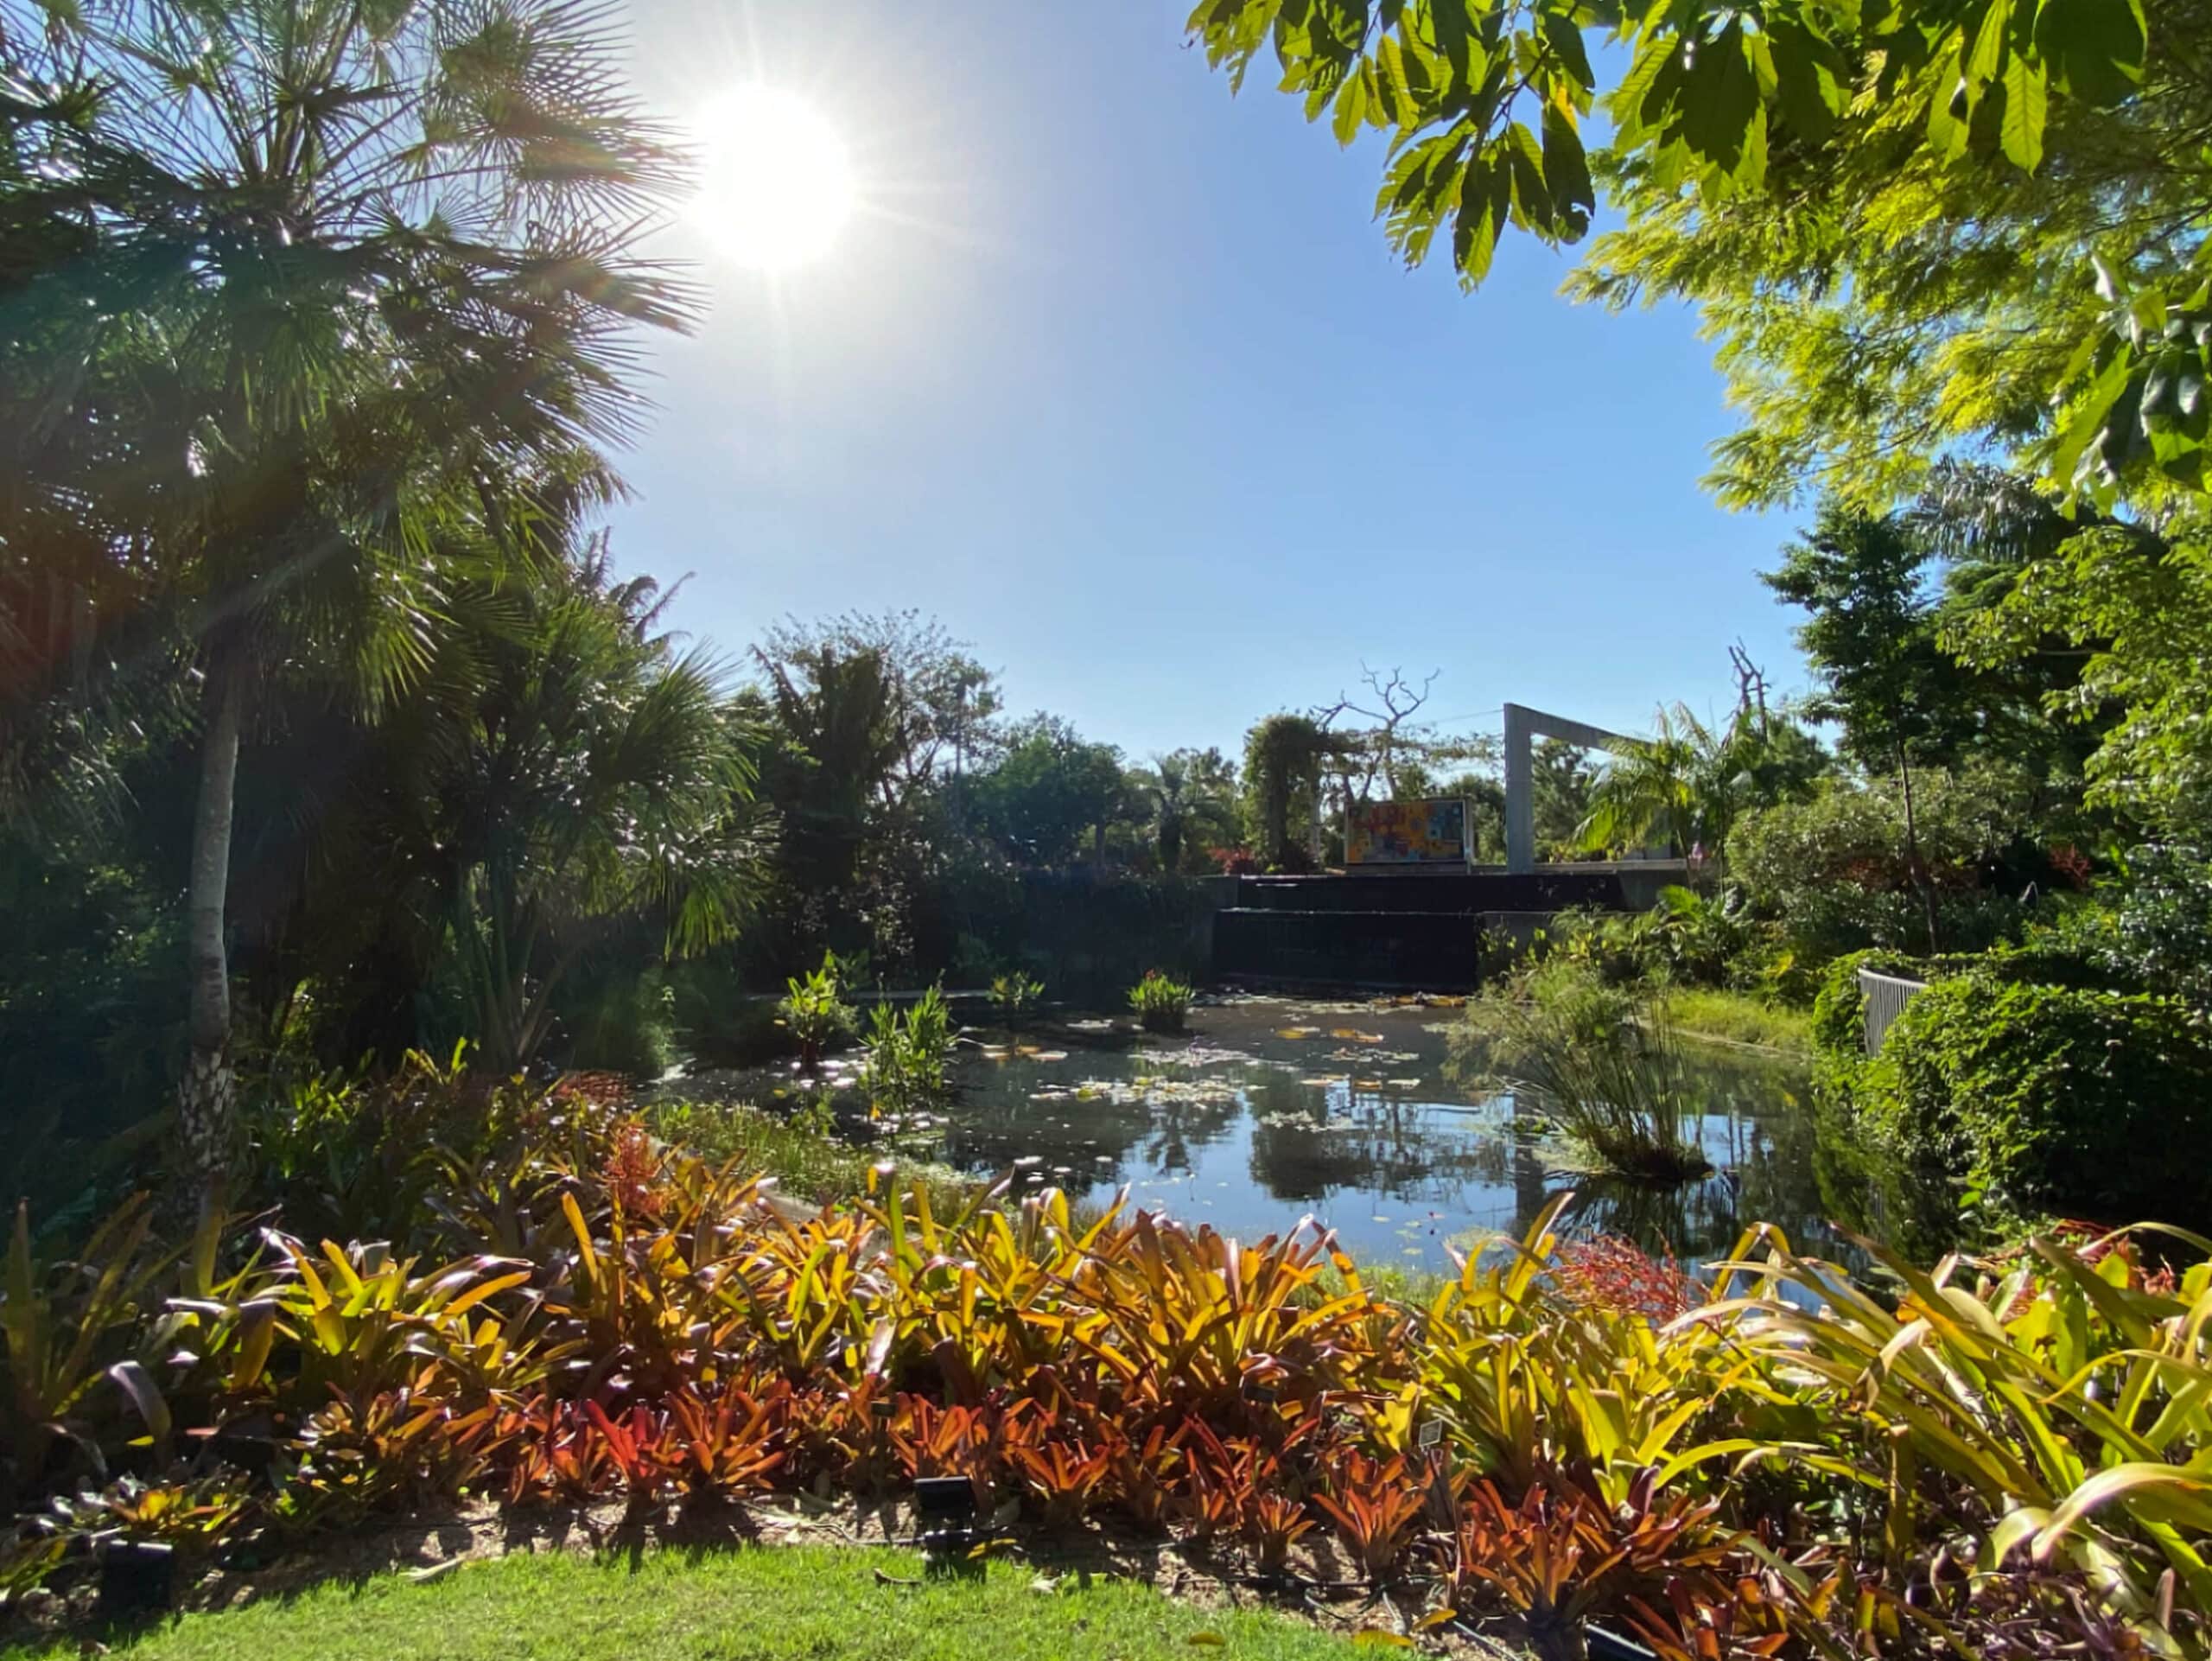 Parks in Naples Florida - Naples Botanical Gardens